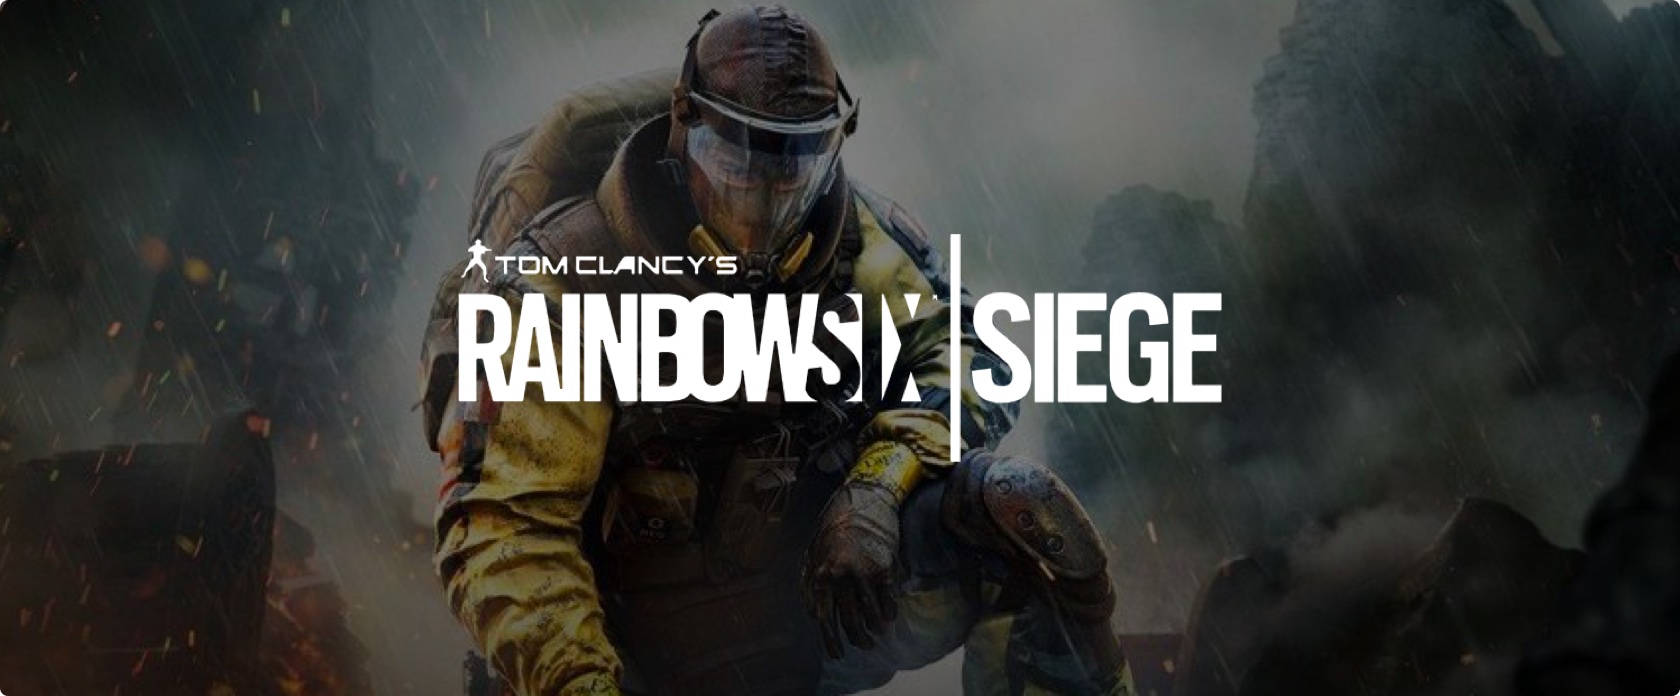 Rainbow Six Siege promotion image